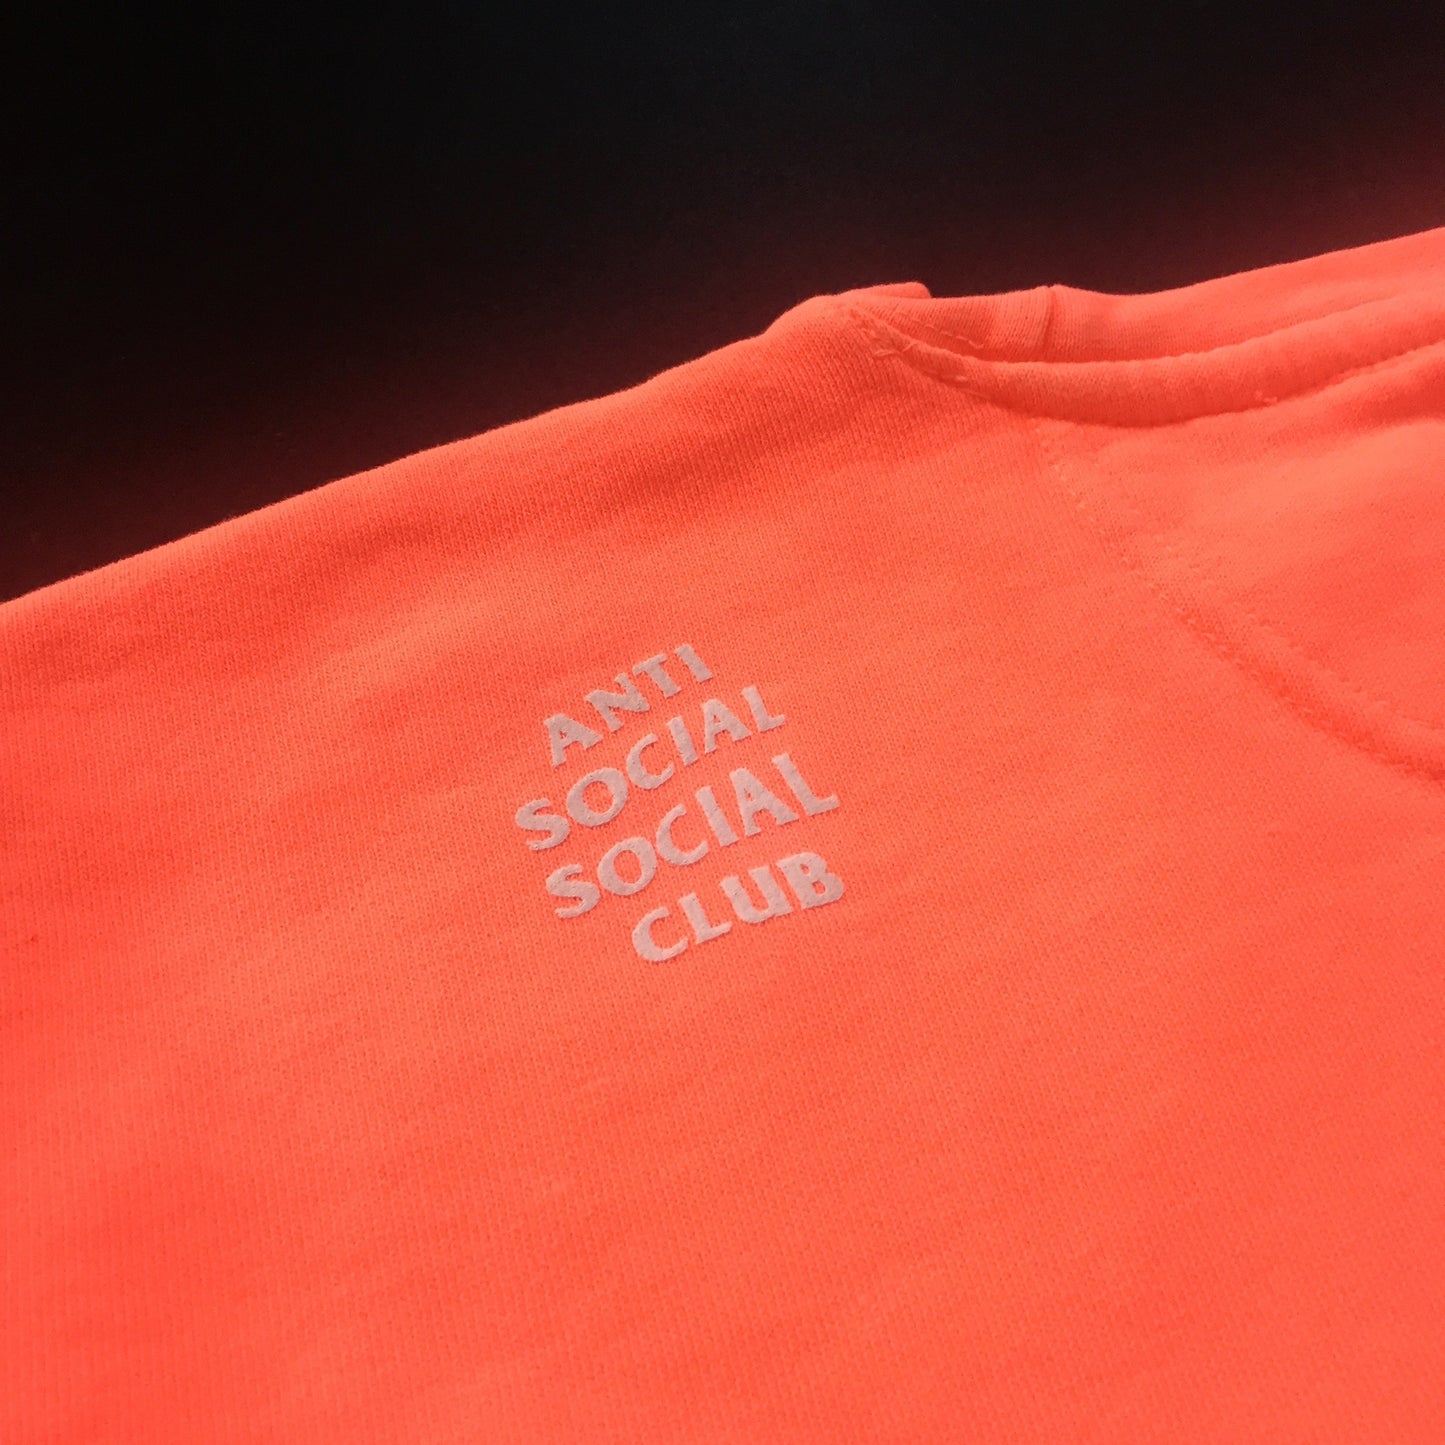 AntiSocial Social Club - 'Foreshadow' Embroidered Crewneck Sweatshirt